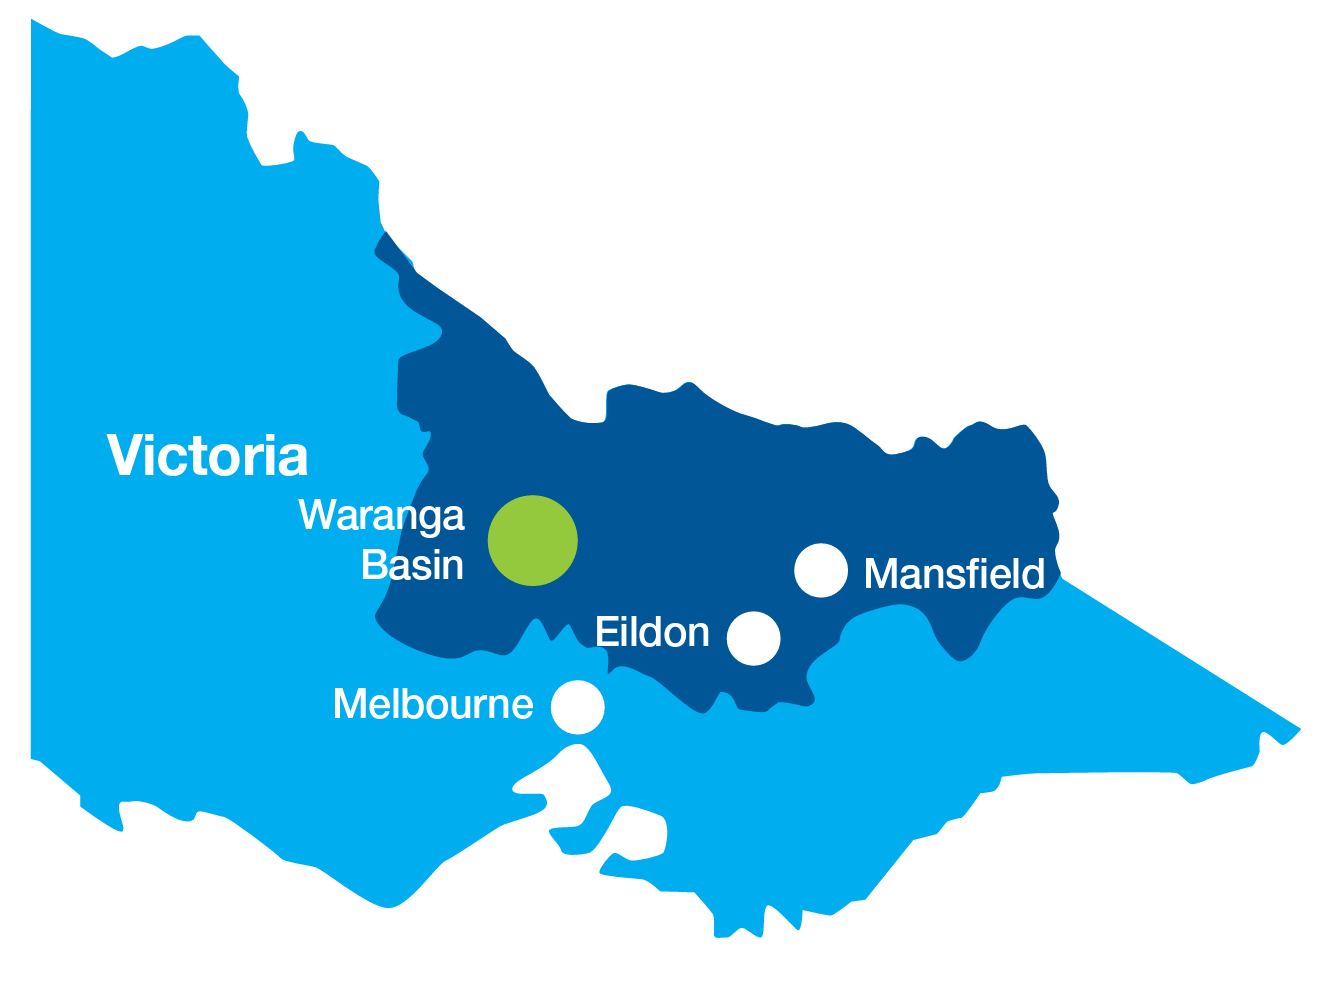 Waranga Basin location in map of Victoria